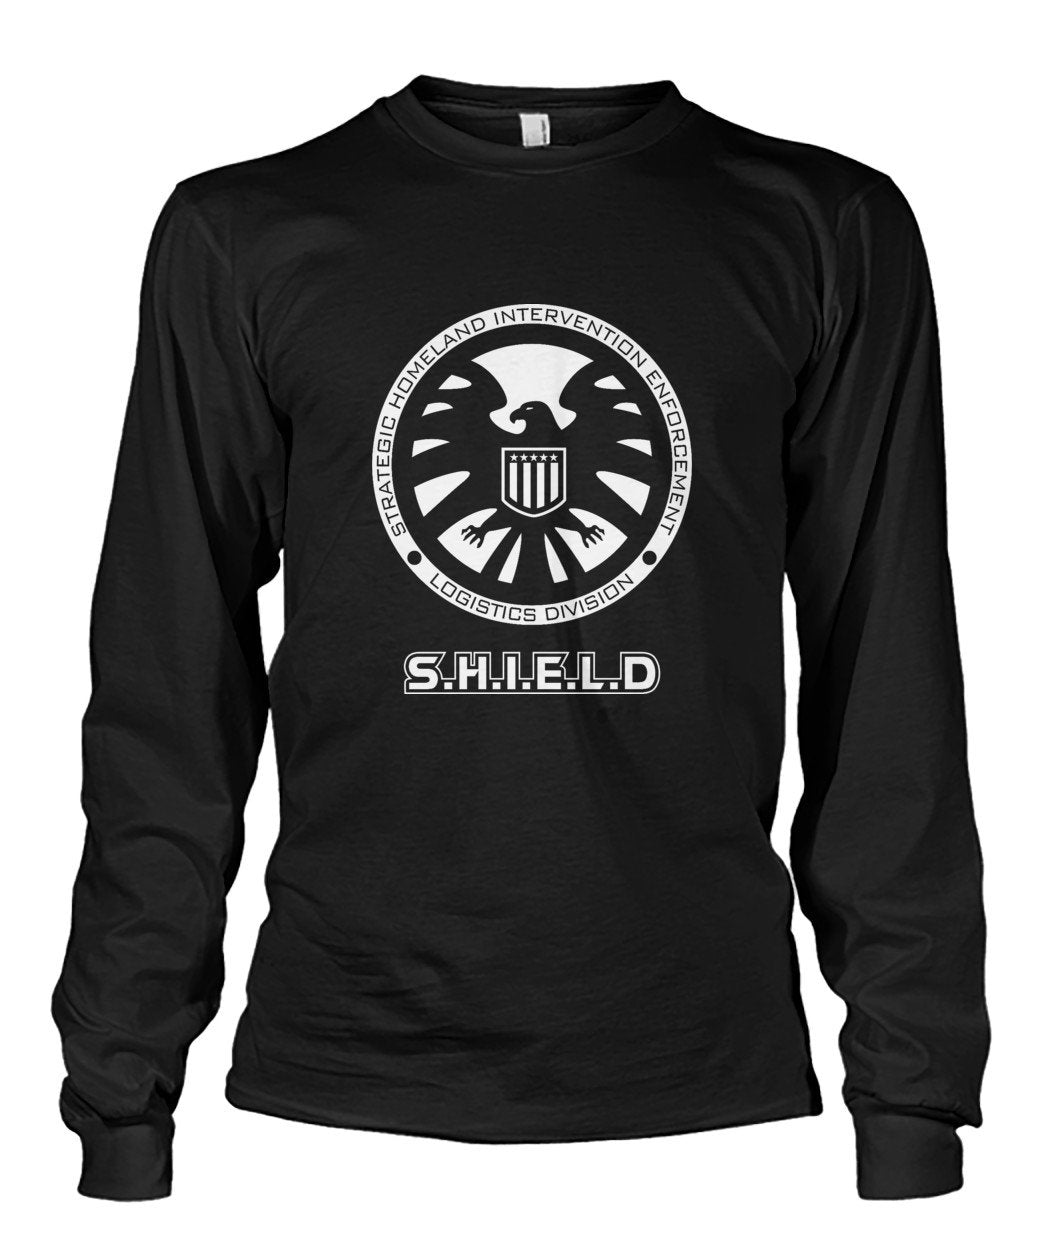 Find Agent Of S.h.i.e.l.d Shirt Unisex 